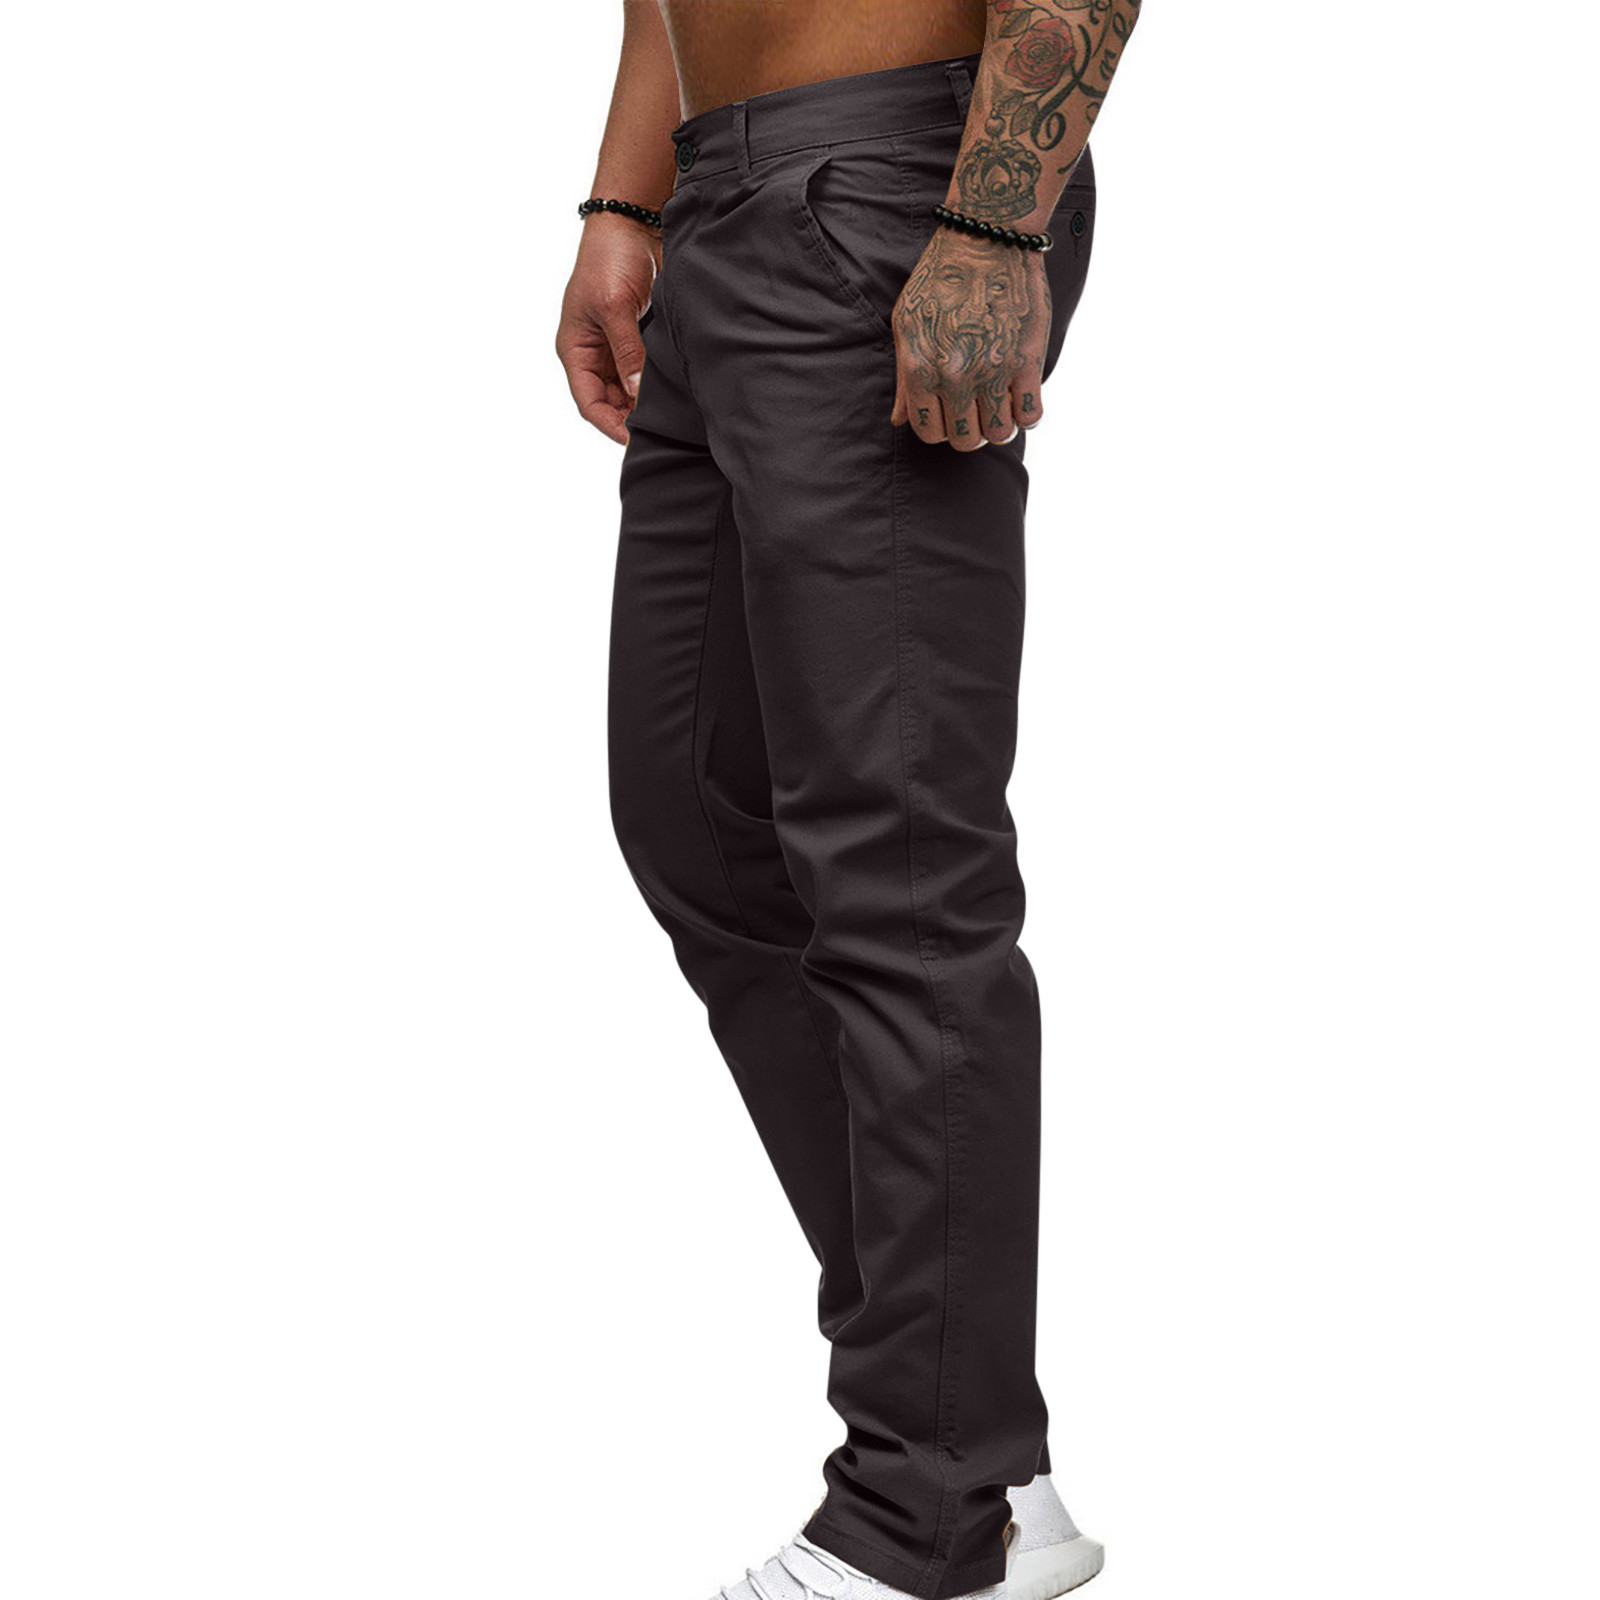 DeHolifer Mens Casual Chinos Pants Cotton Slacks Elastic Waistband Classic Fit Flat Front Khaki Pant Dark Gray 3XL - image 4 of 5